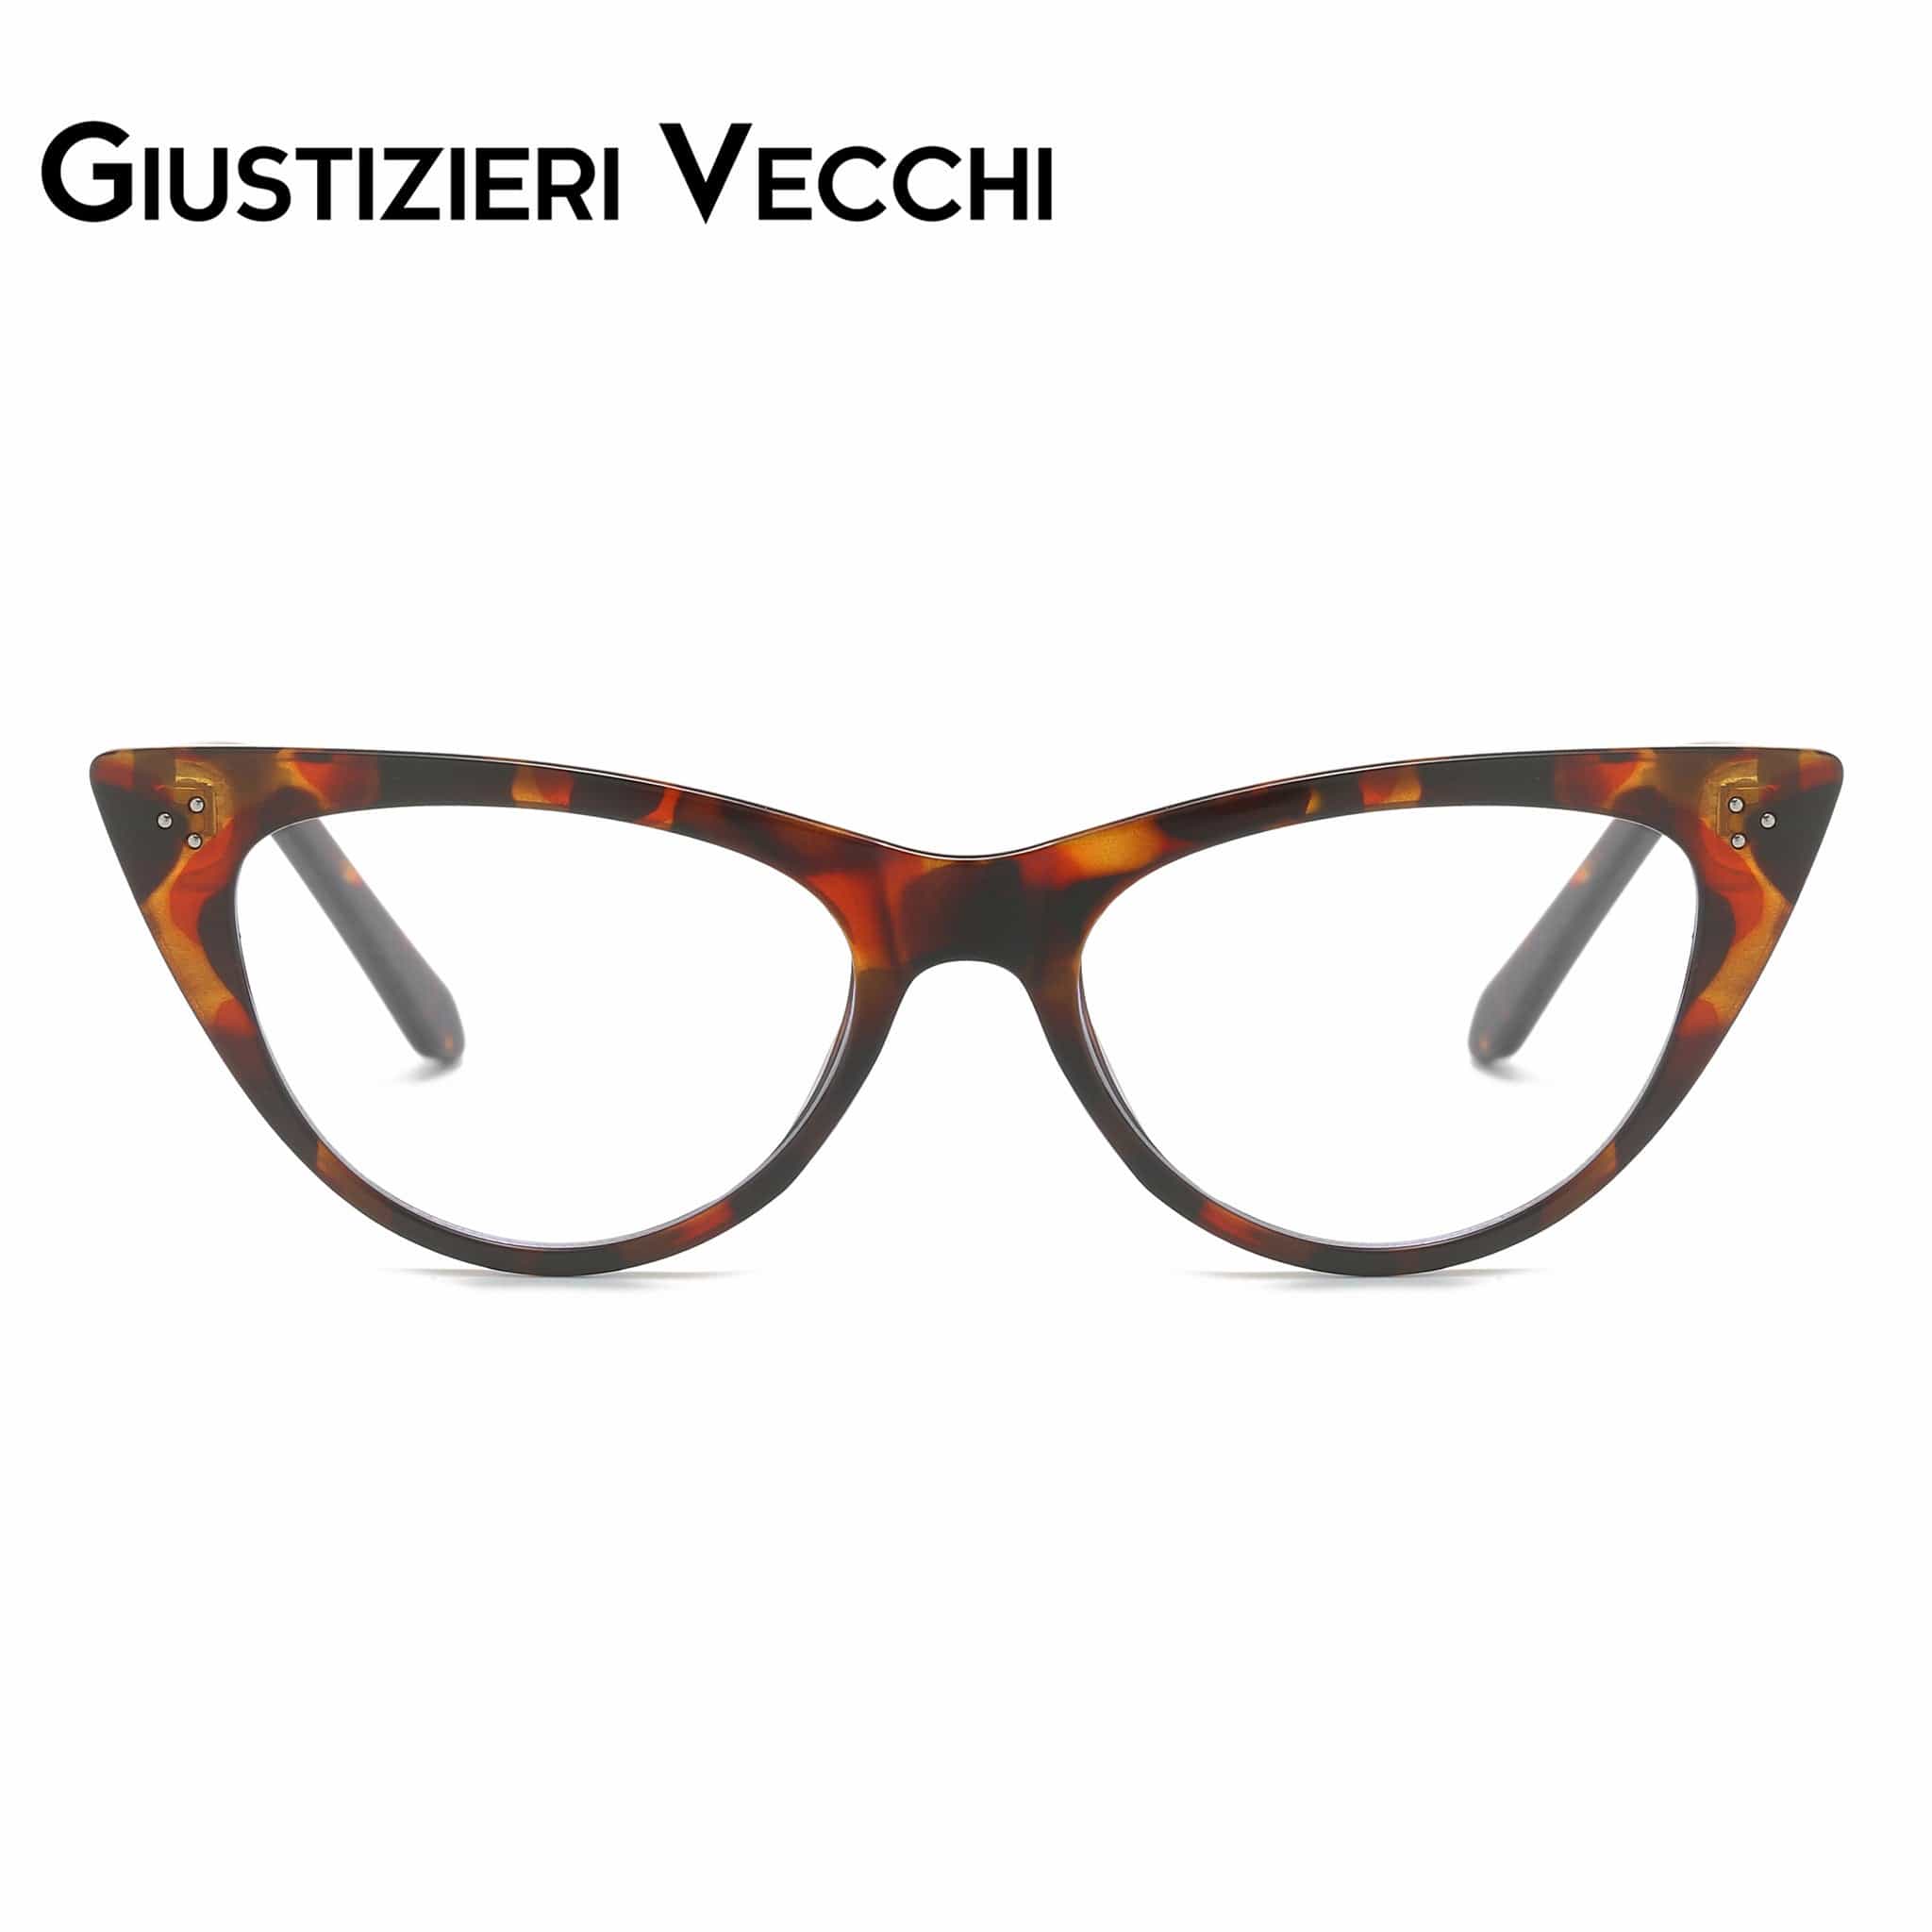 GIUSTIZIERI VECCHI Eyeglasses Medium / Merigold Tortoise RoyalGlamour Duo